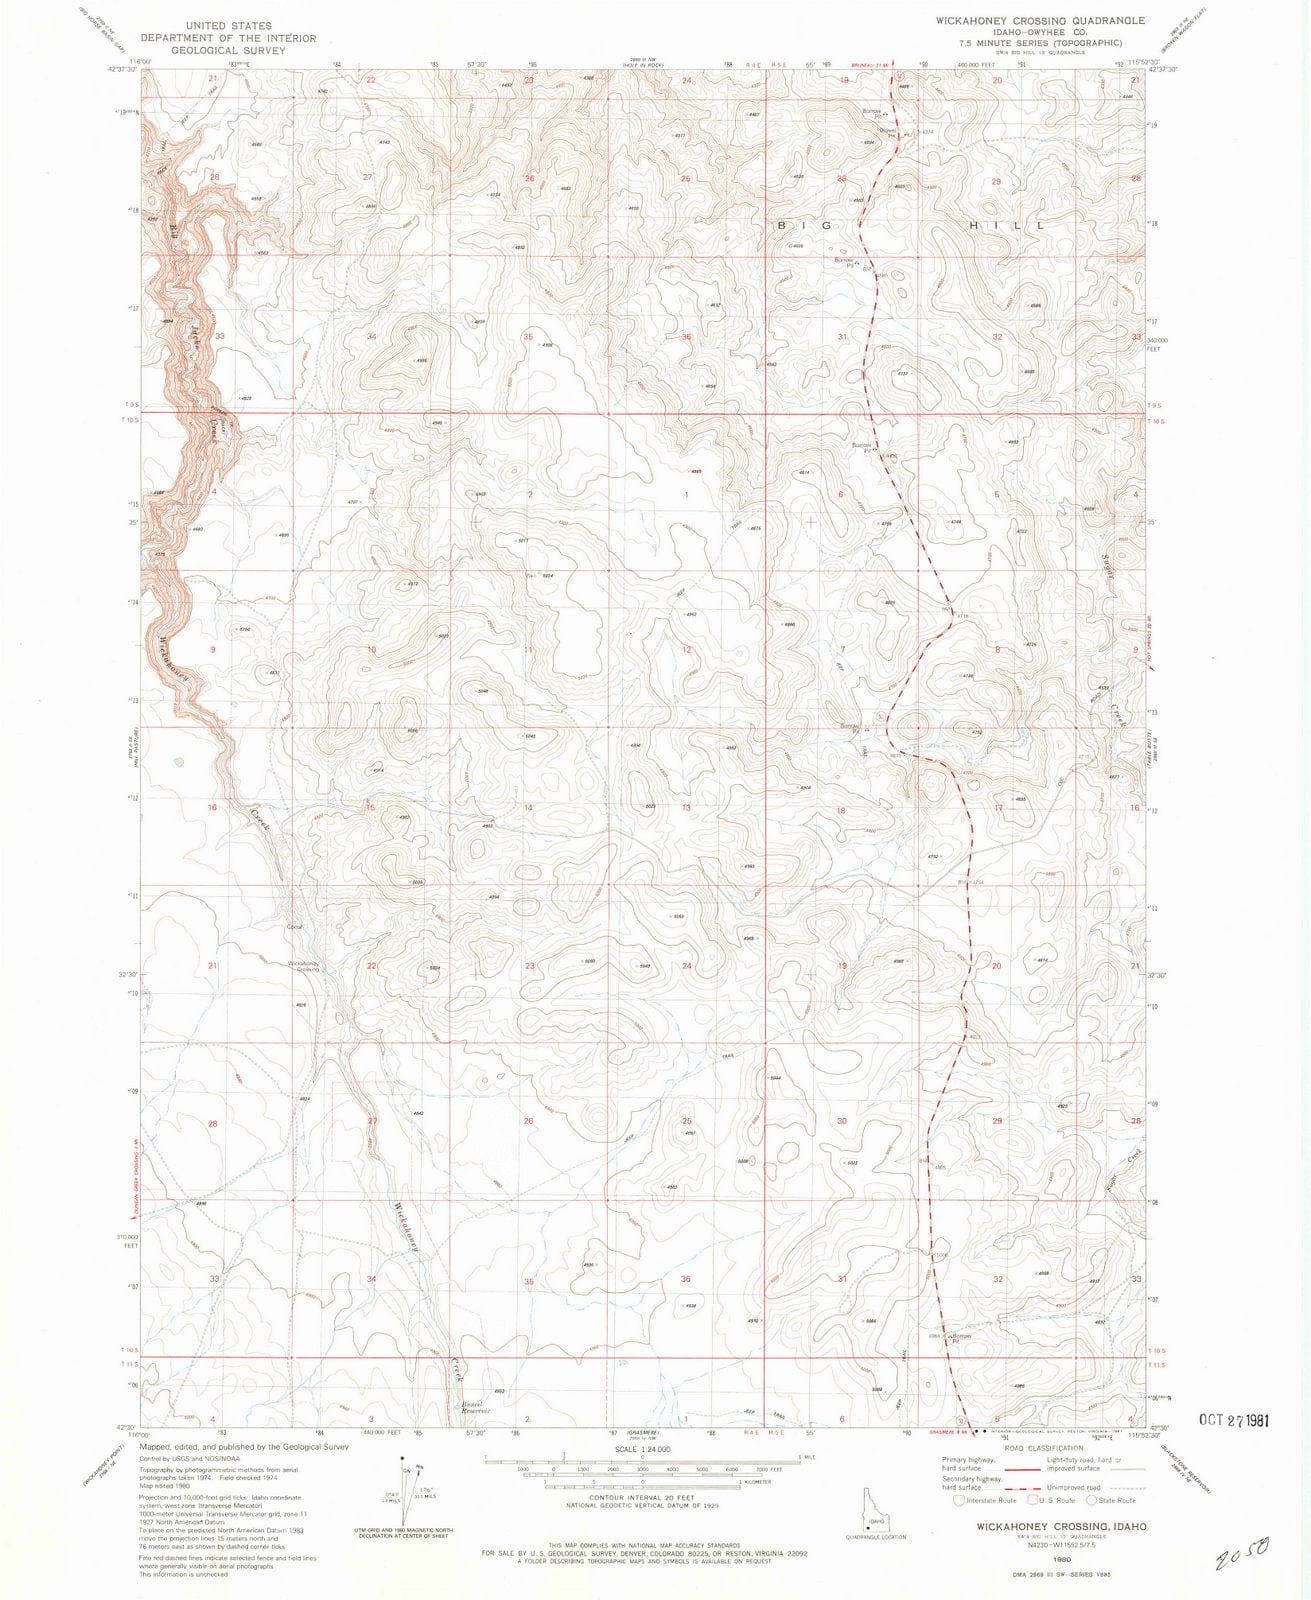 1980 Wickahoney Crossing, ID - Idaho - USGS Topographic Map